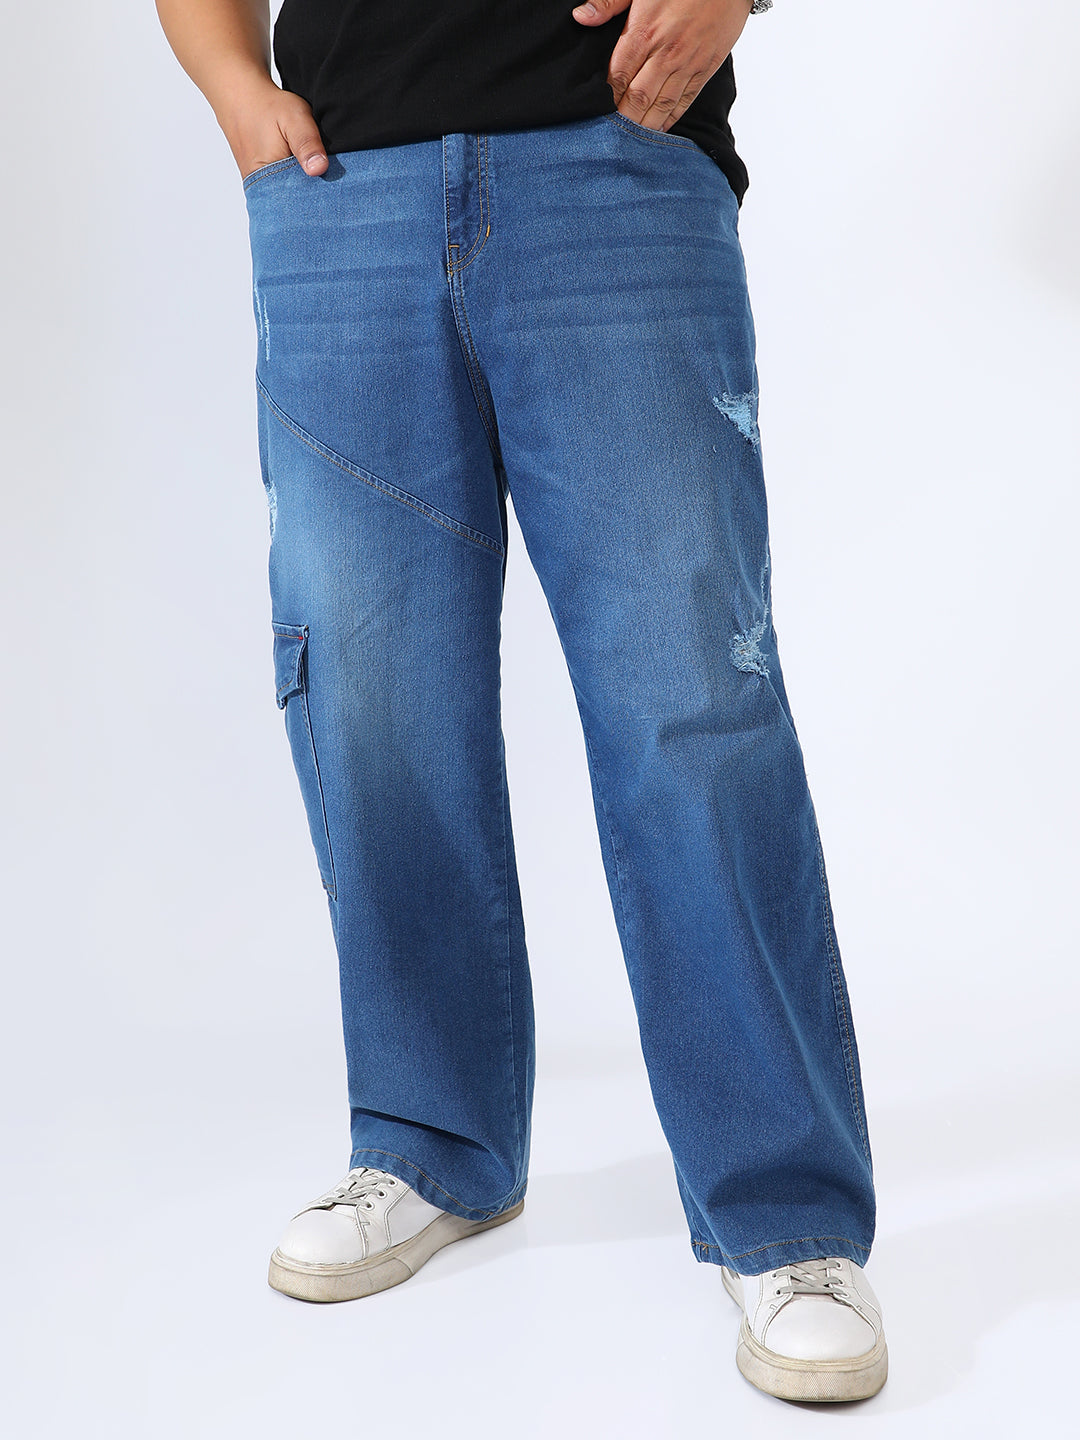 Asymmetrical Stitch Denim Jeans